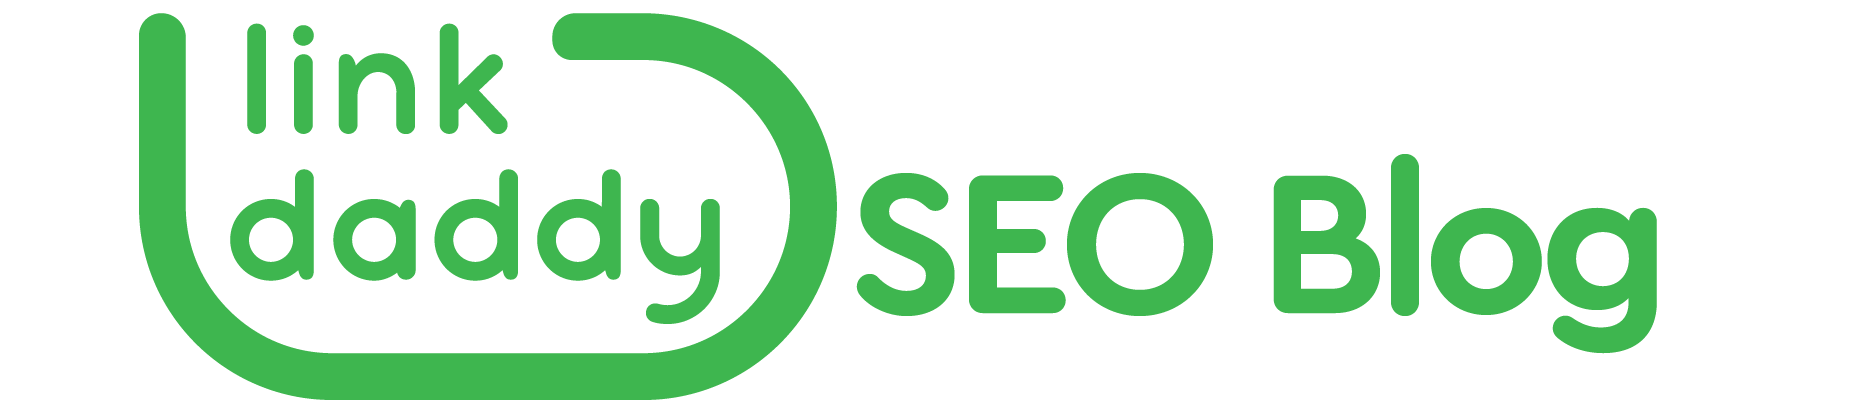 https://storage.googleapis.com/cloudsites/seo-services/861n5hkc6/img/cropped-linkdaddy-seoblog-logo.png